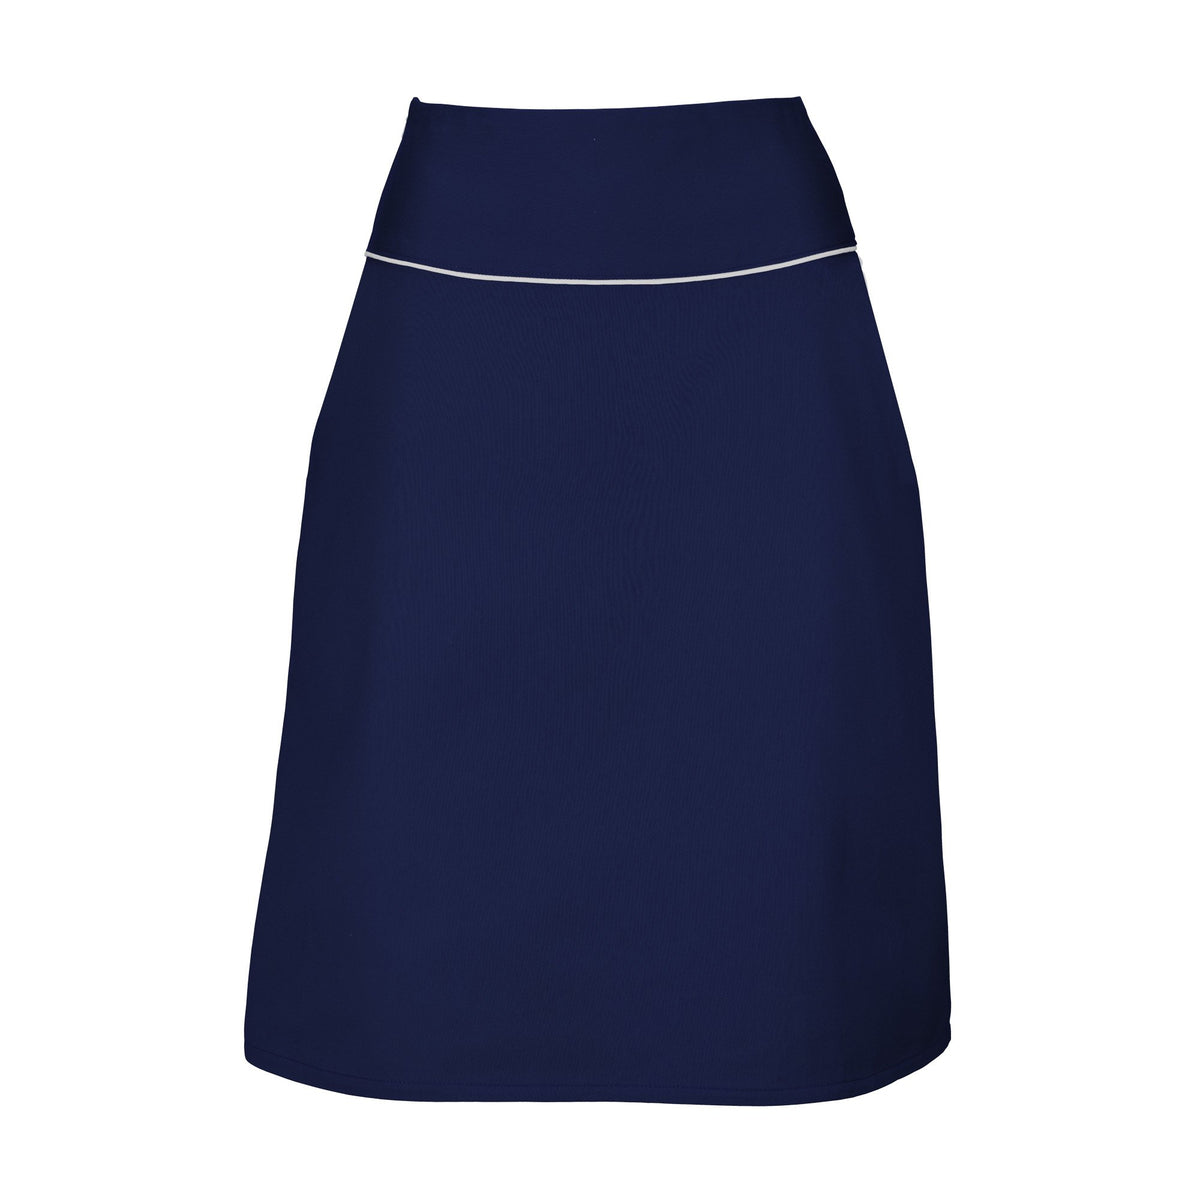 Suzy Navy A-Line Skirt, Navy Knee Length Skirt